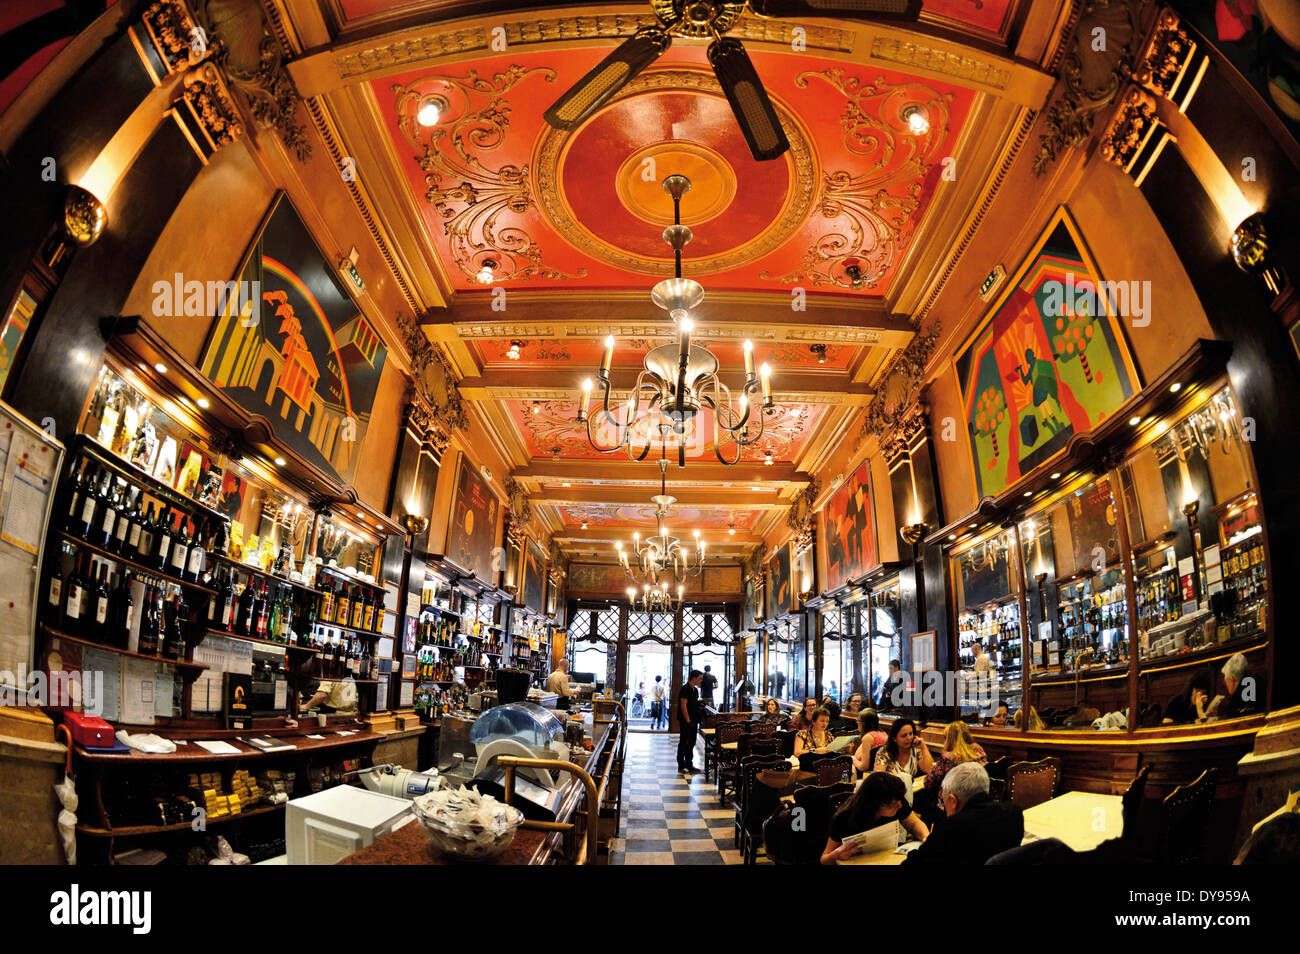 Portugal, Lisbon: Interior of iconic Cafe A Brasileira Stock Photo